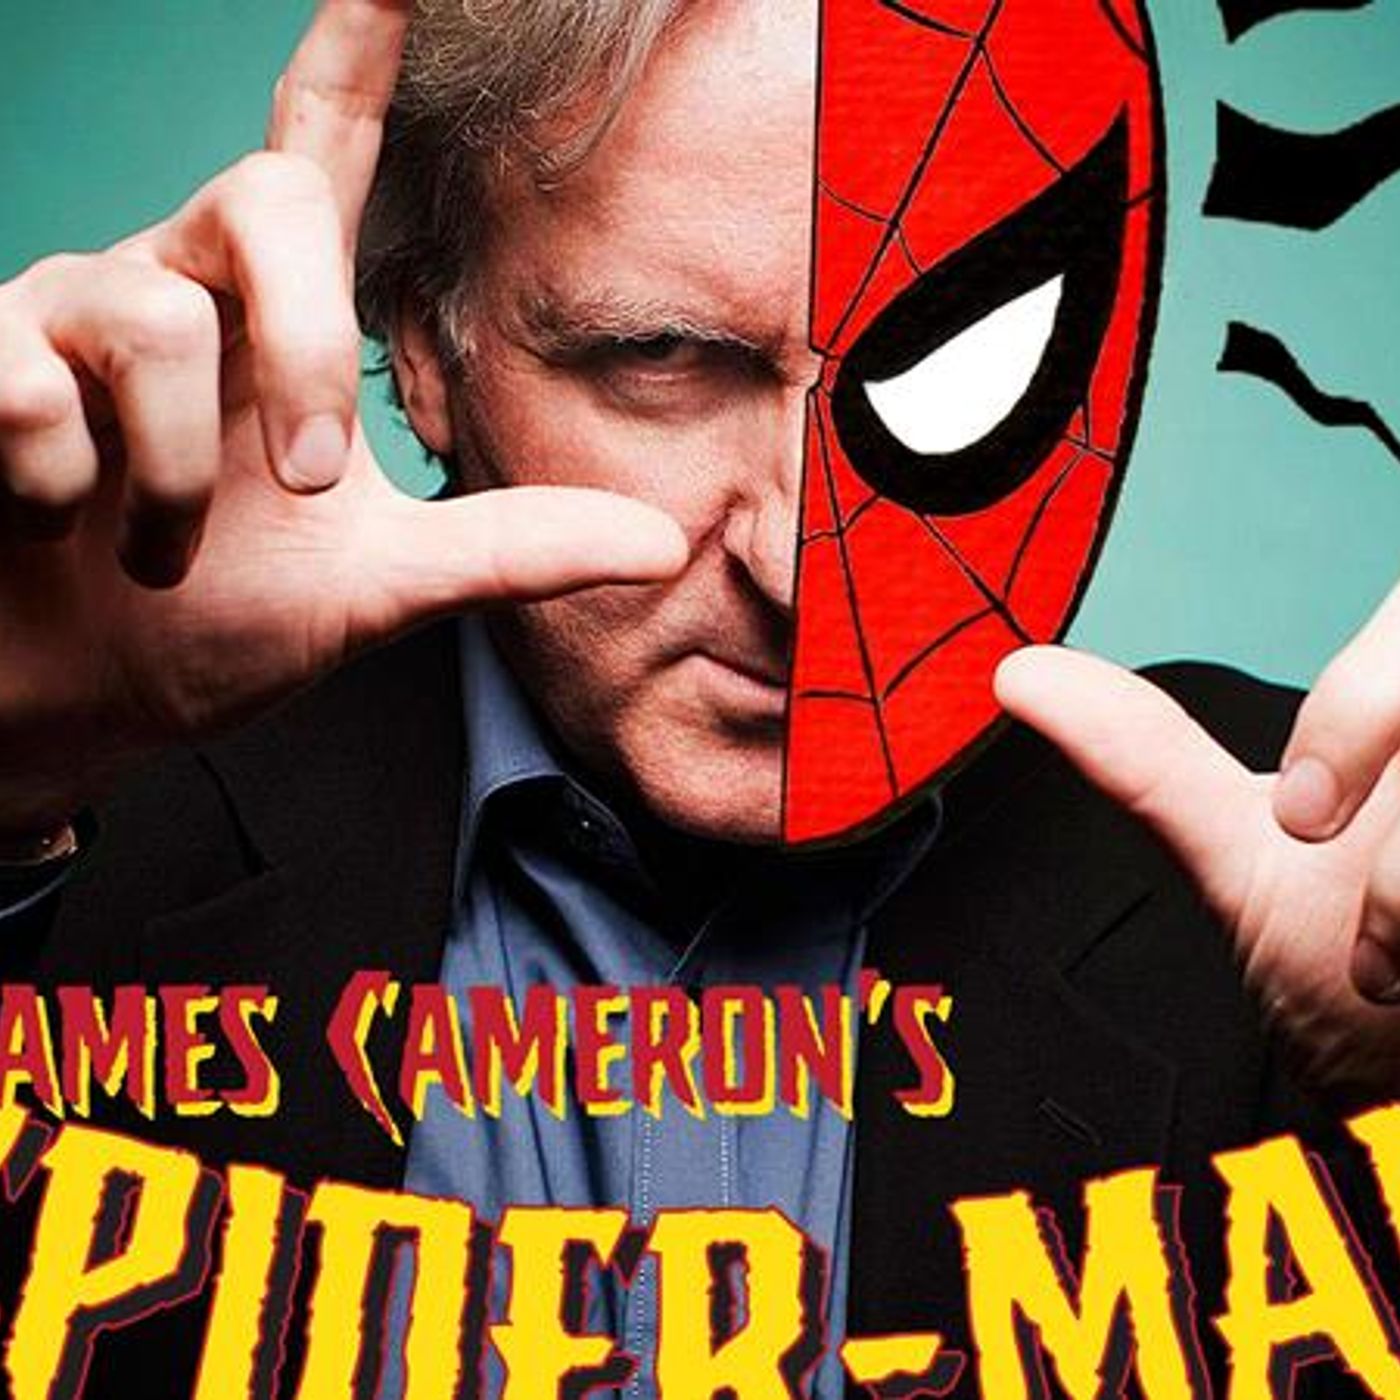 56: James Cameron's Spider-Man, Part 2